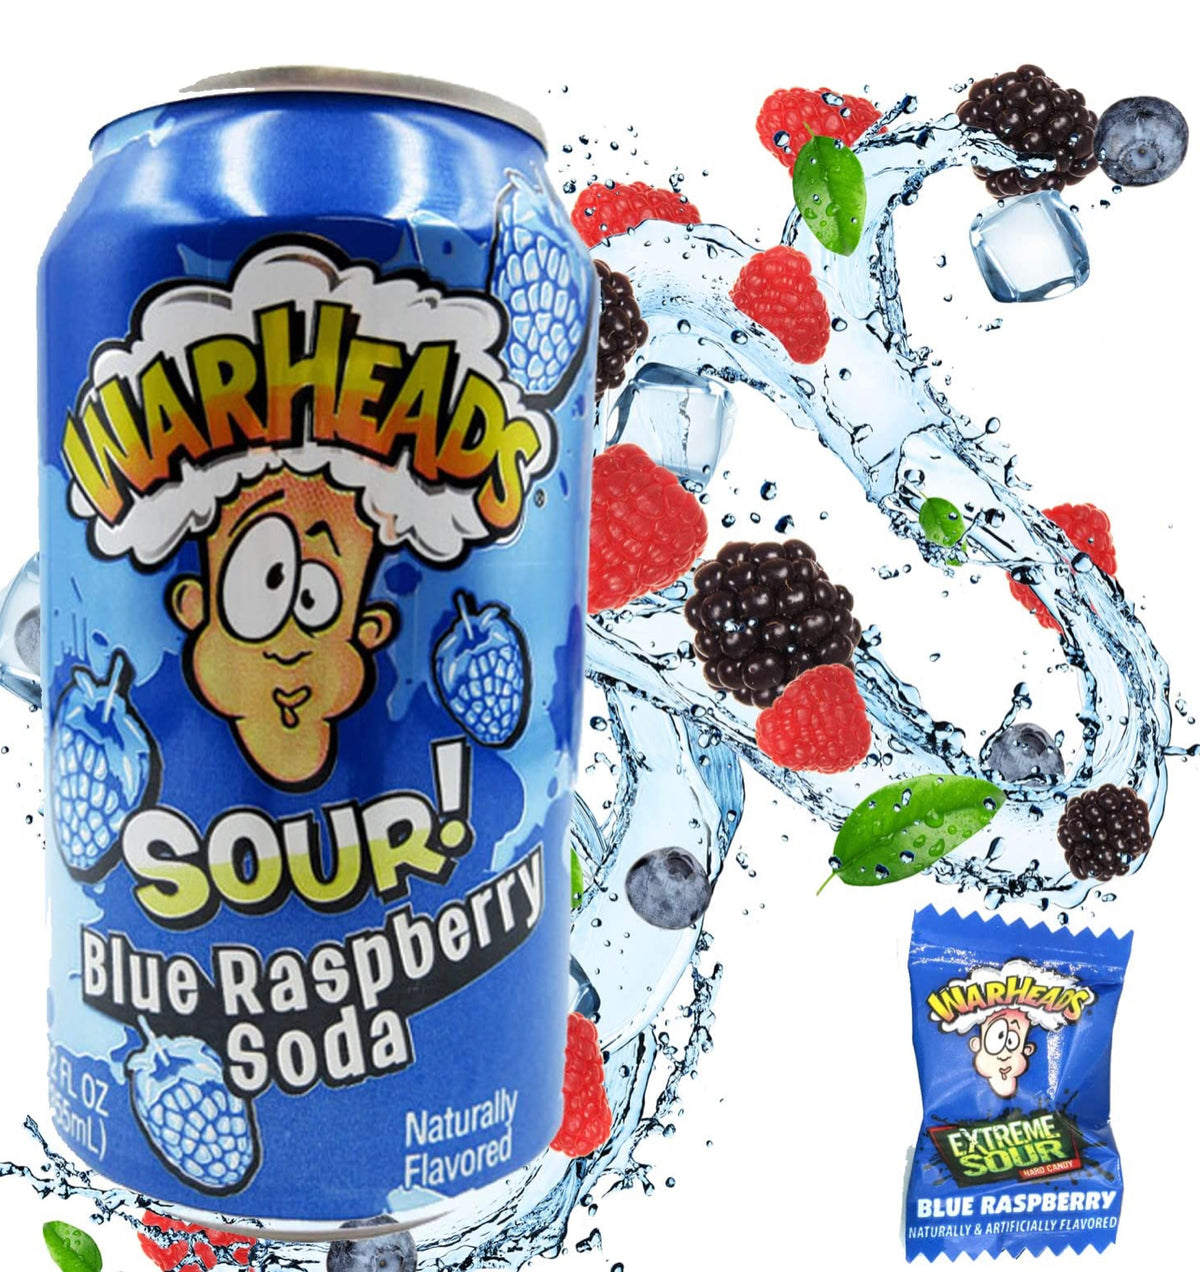 Warheads Soda - Blue Raspberry